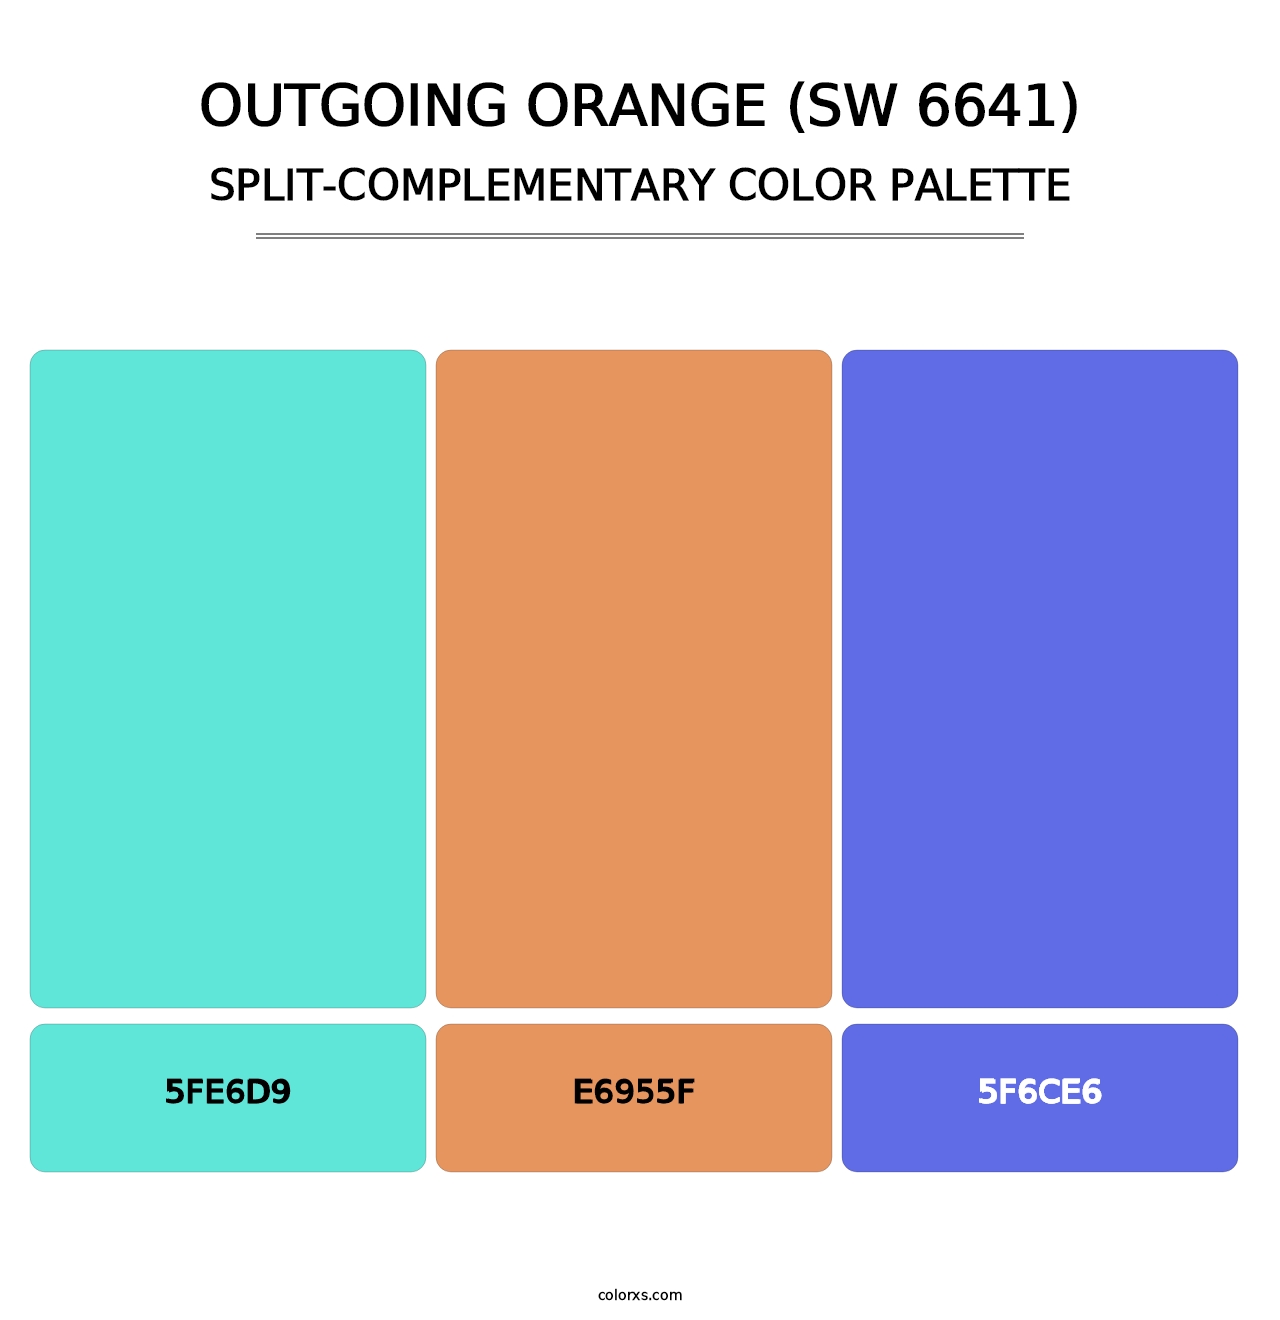 Outgoing Orange (SW 6641) - Split-Complementary Color Palette